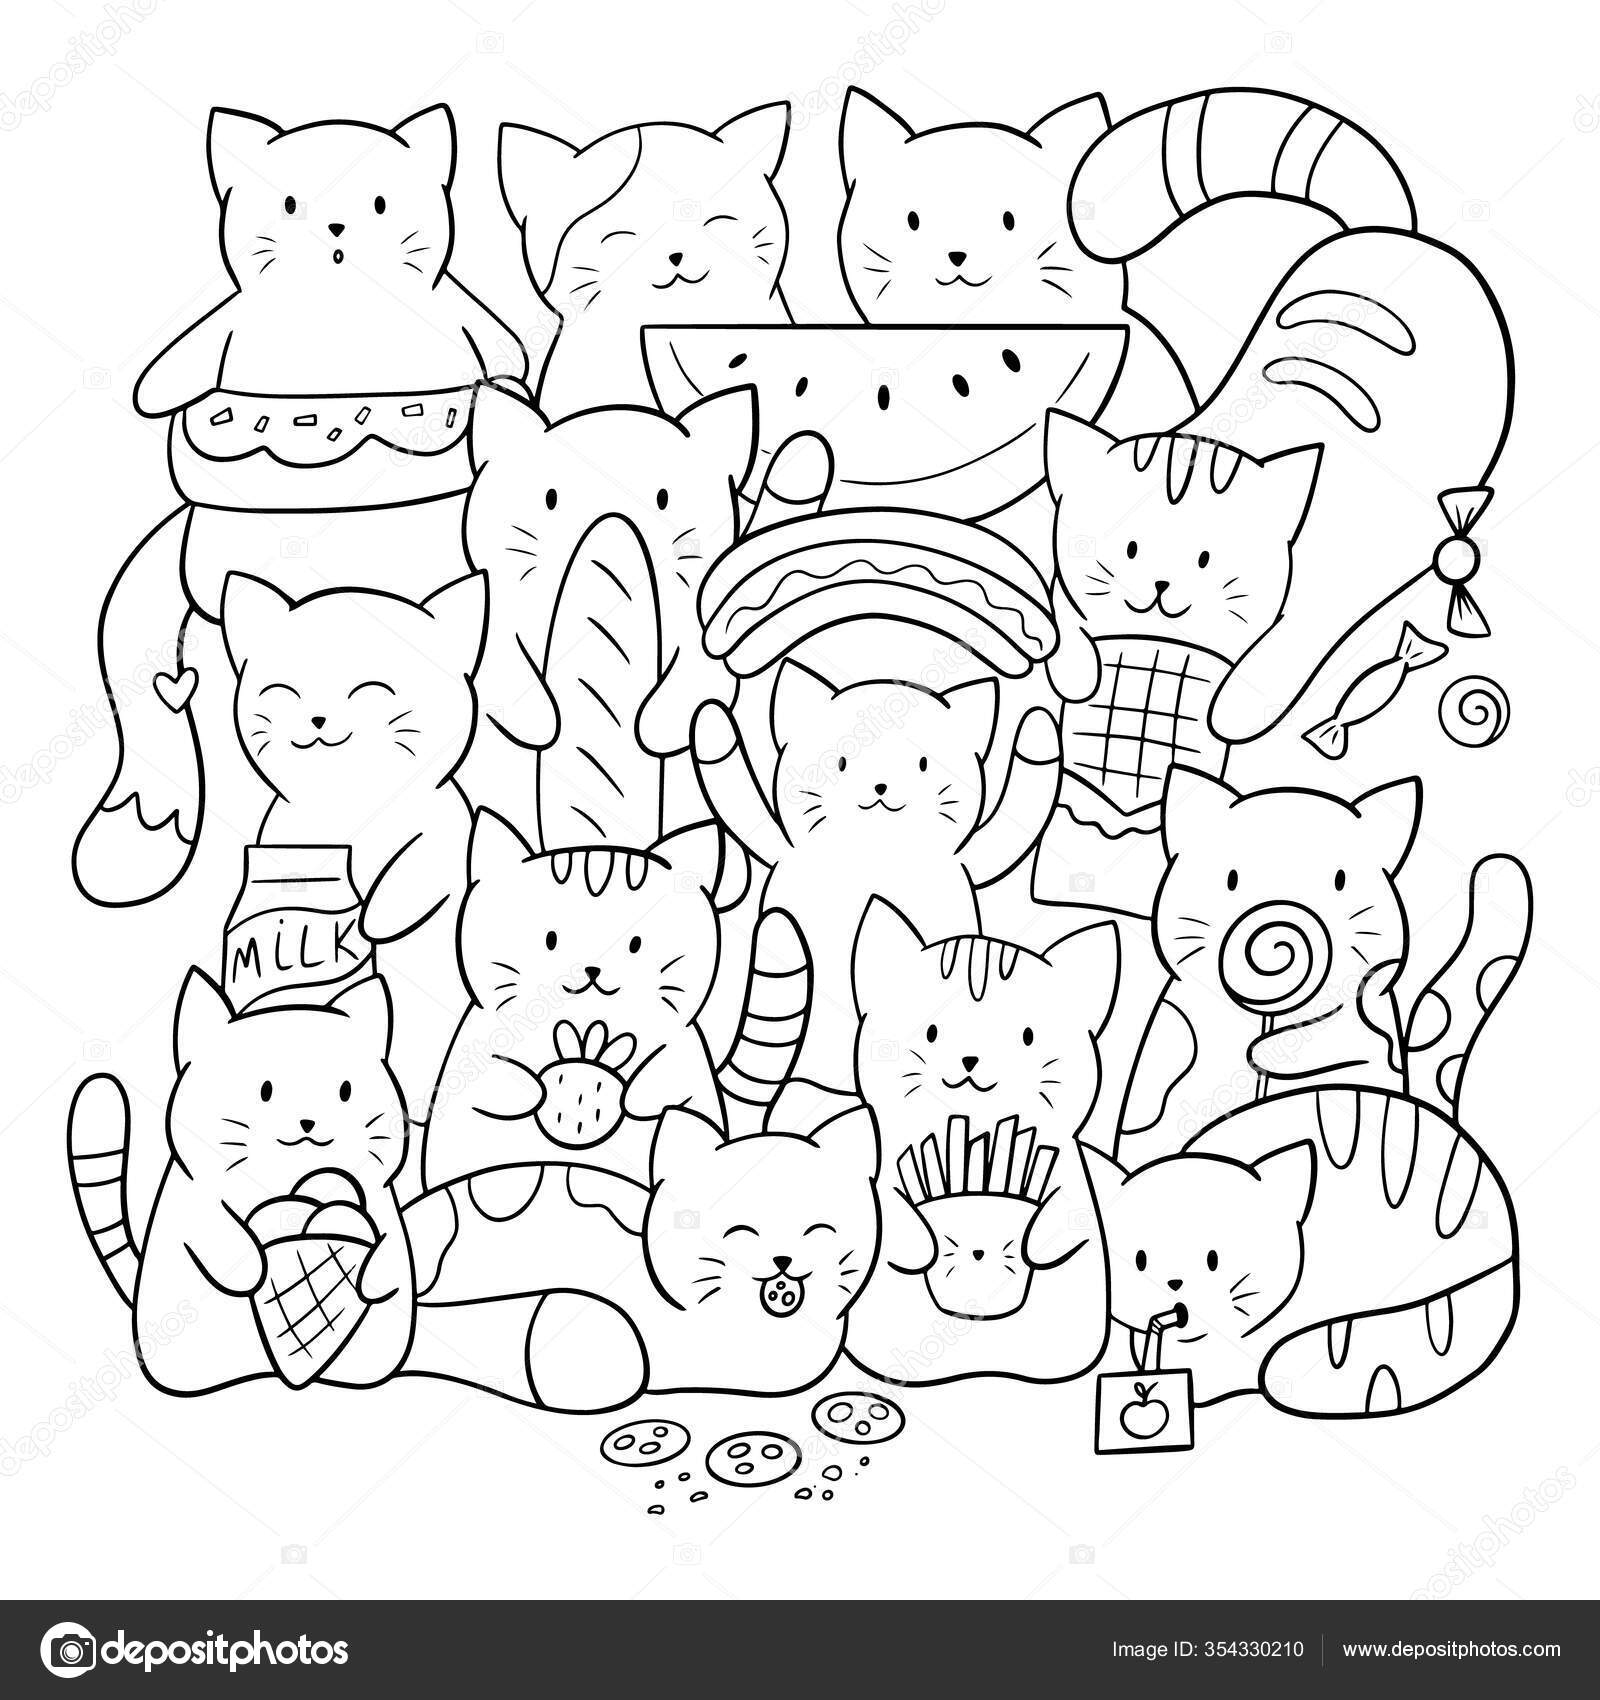 Cute doodle art coloring page